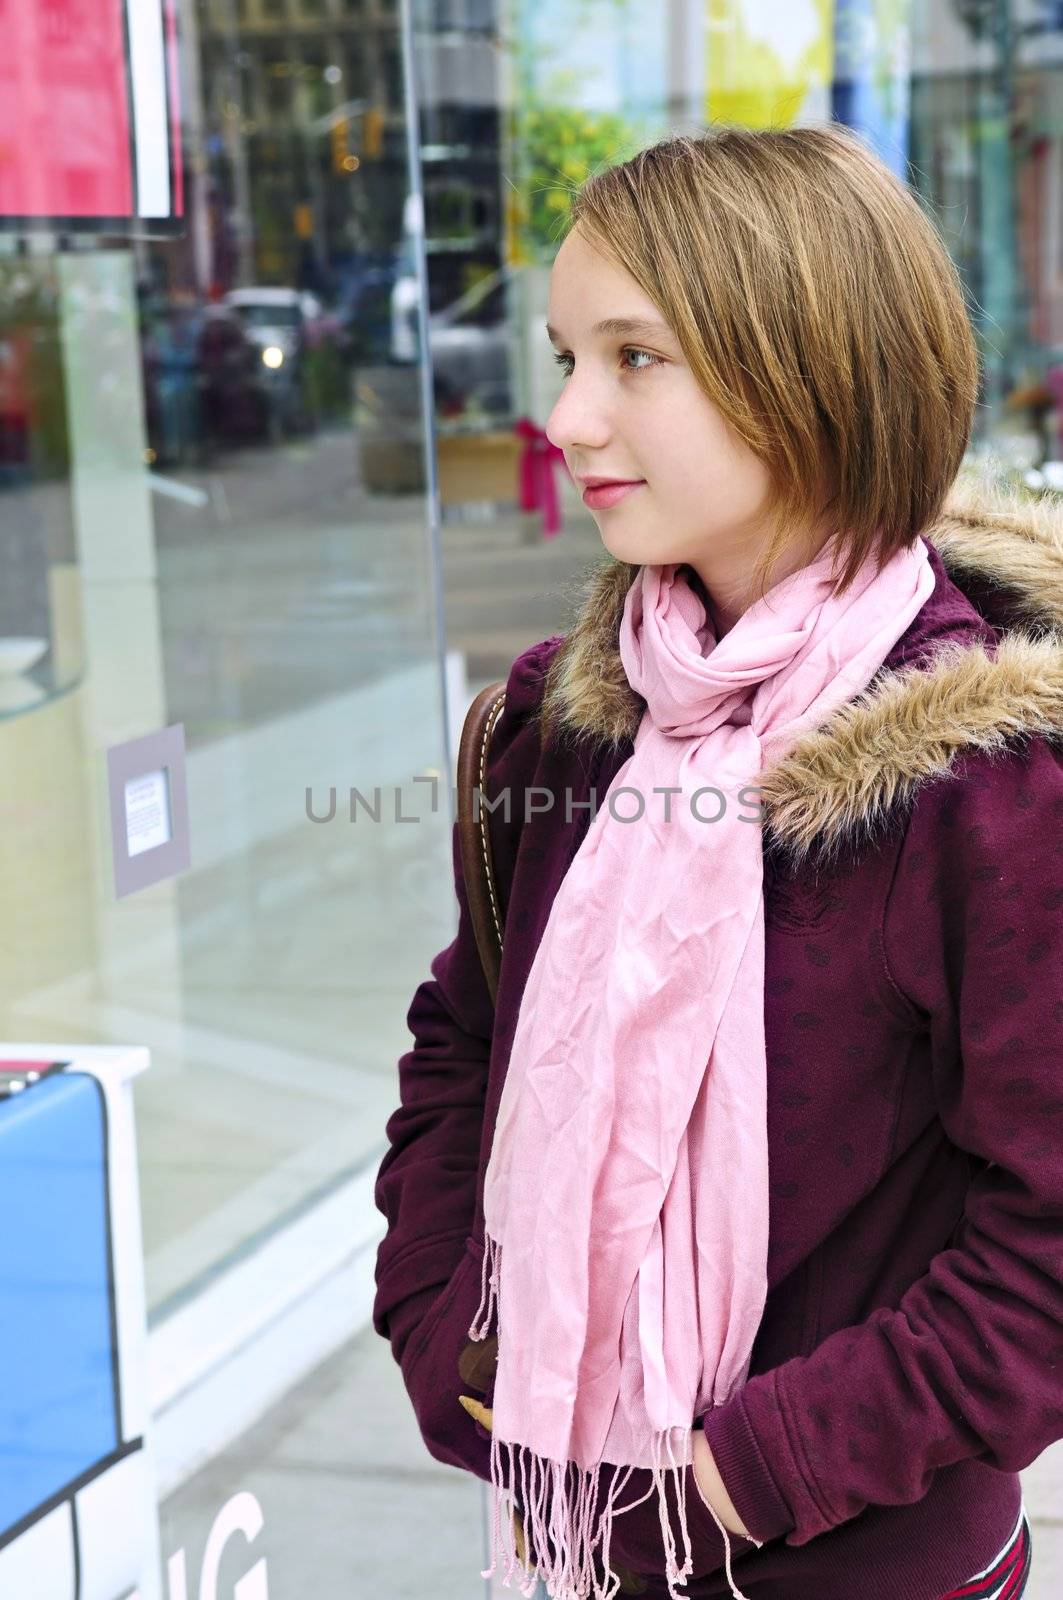 Teenage girl shopping by elenathewise